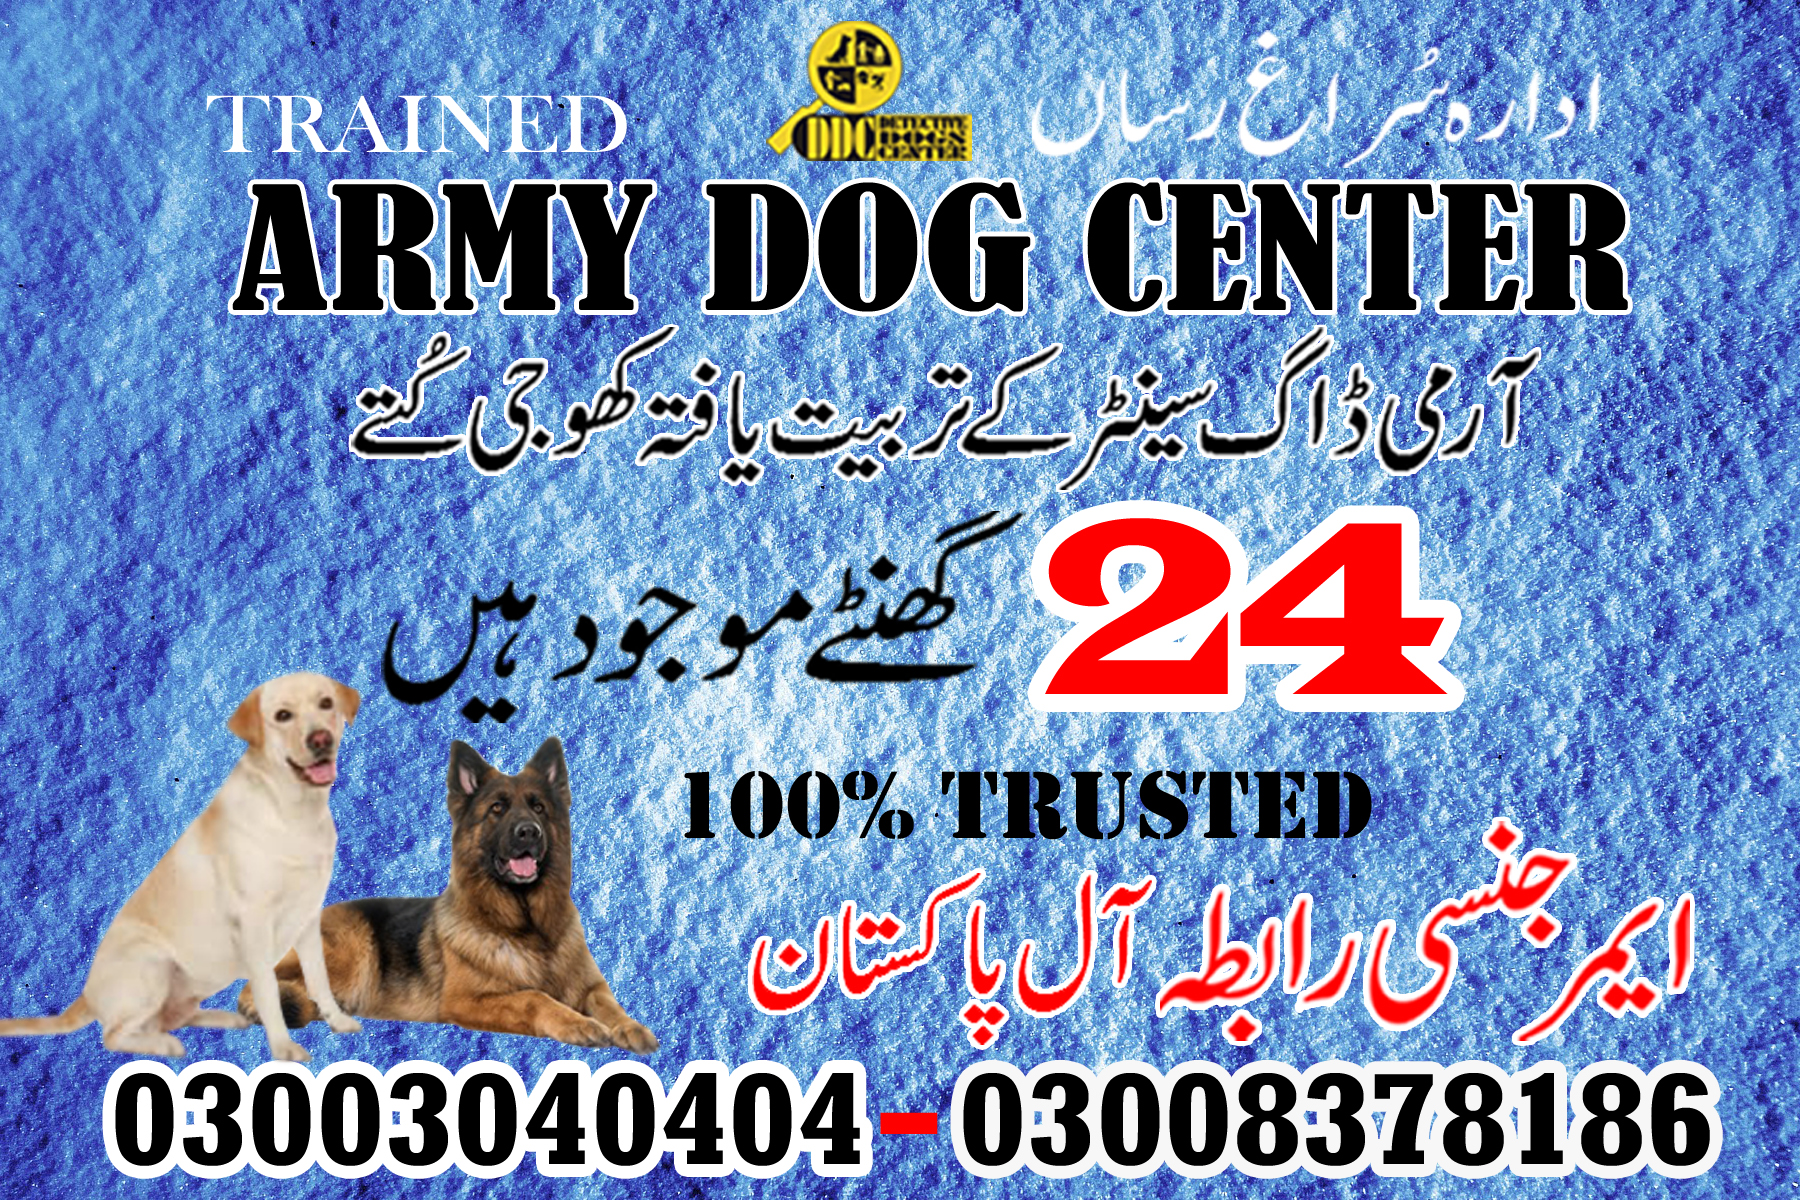 Army Dog Center Sindh Pakistan Contact Number 03003040404